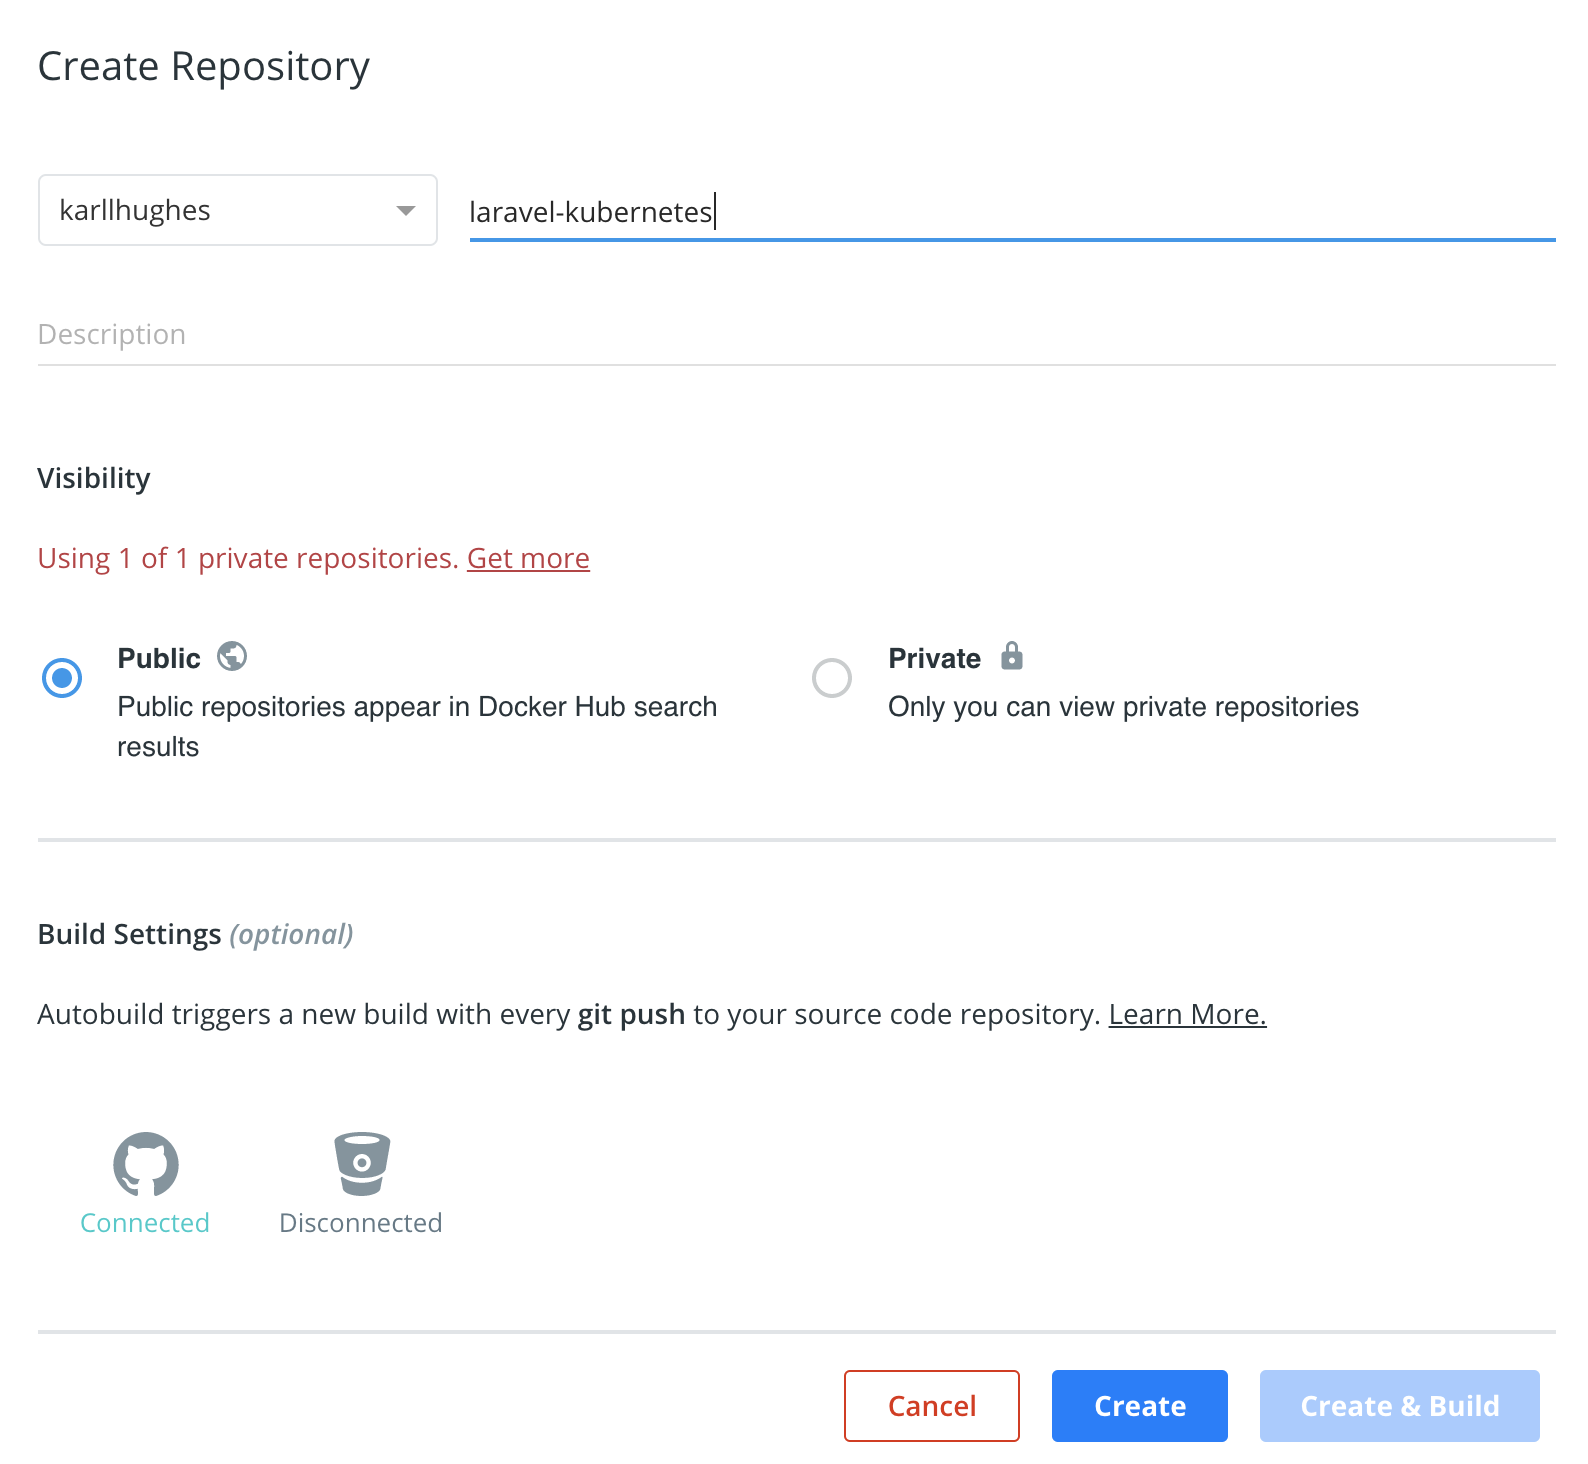 Creating a new repository on Docker Hub